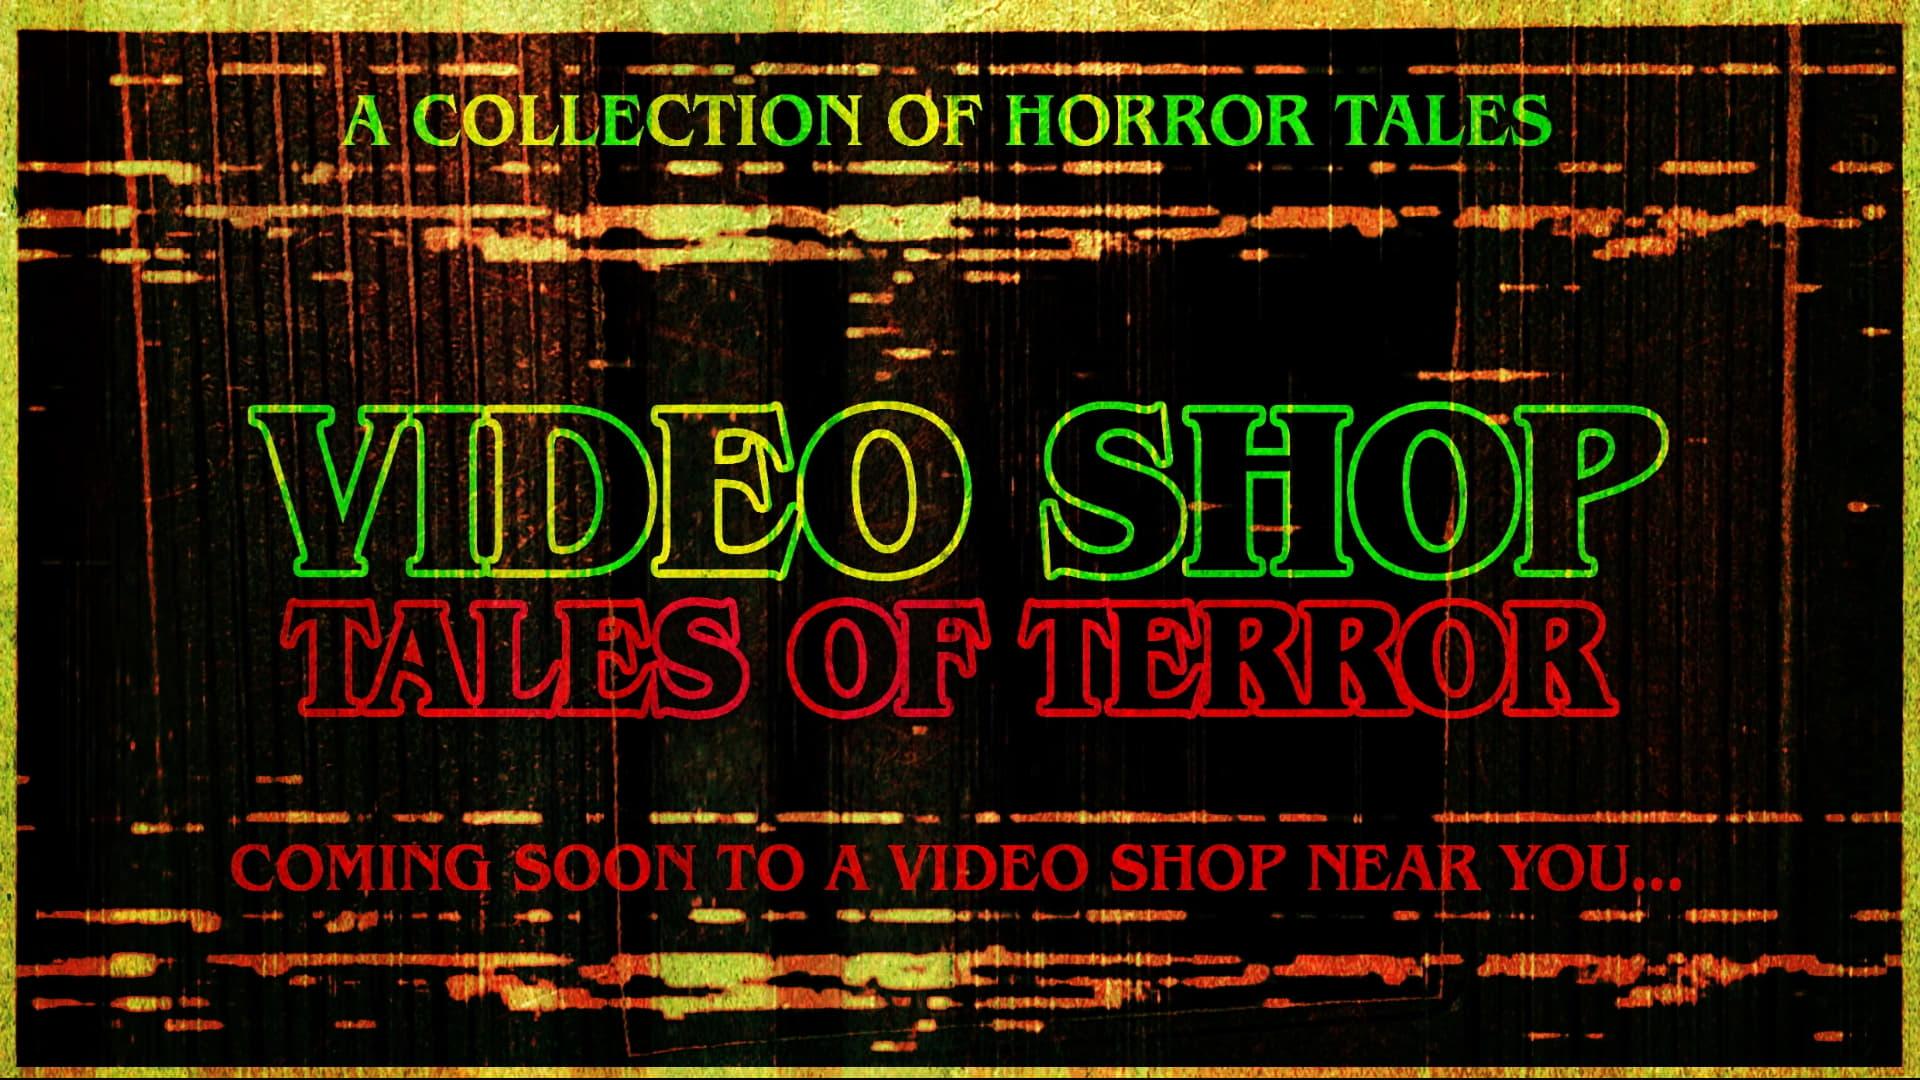 Video Shop Tales of Terror backdrop